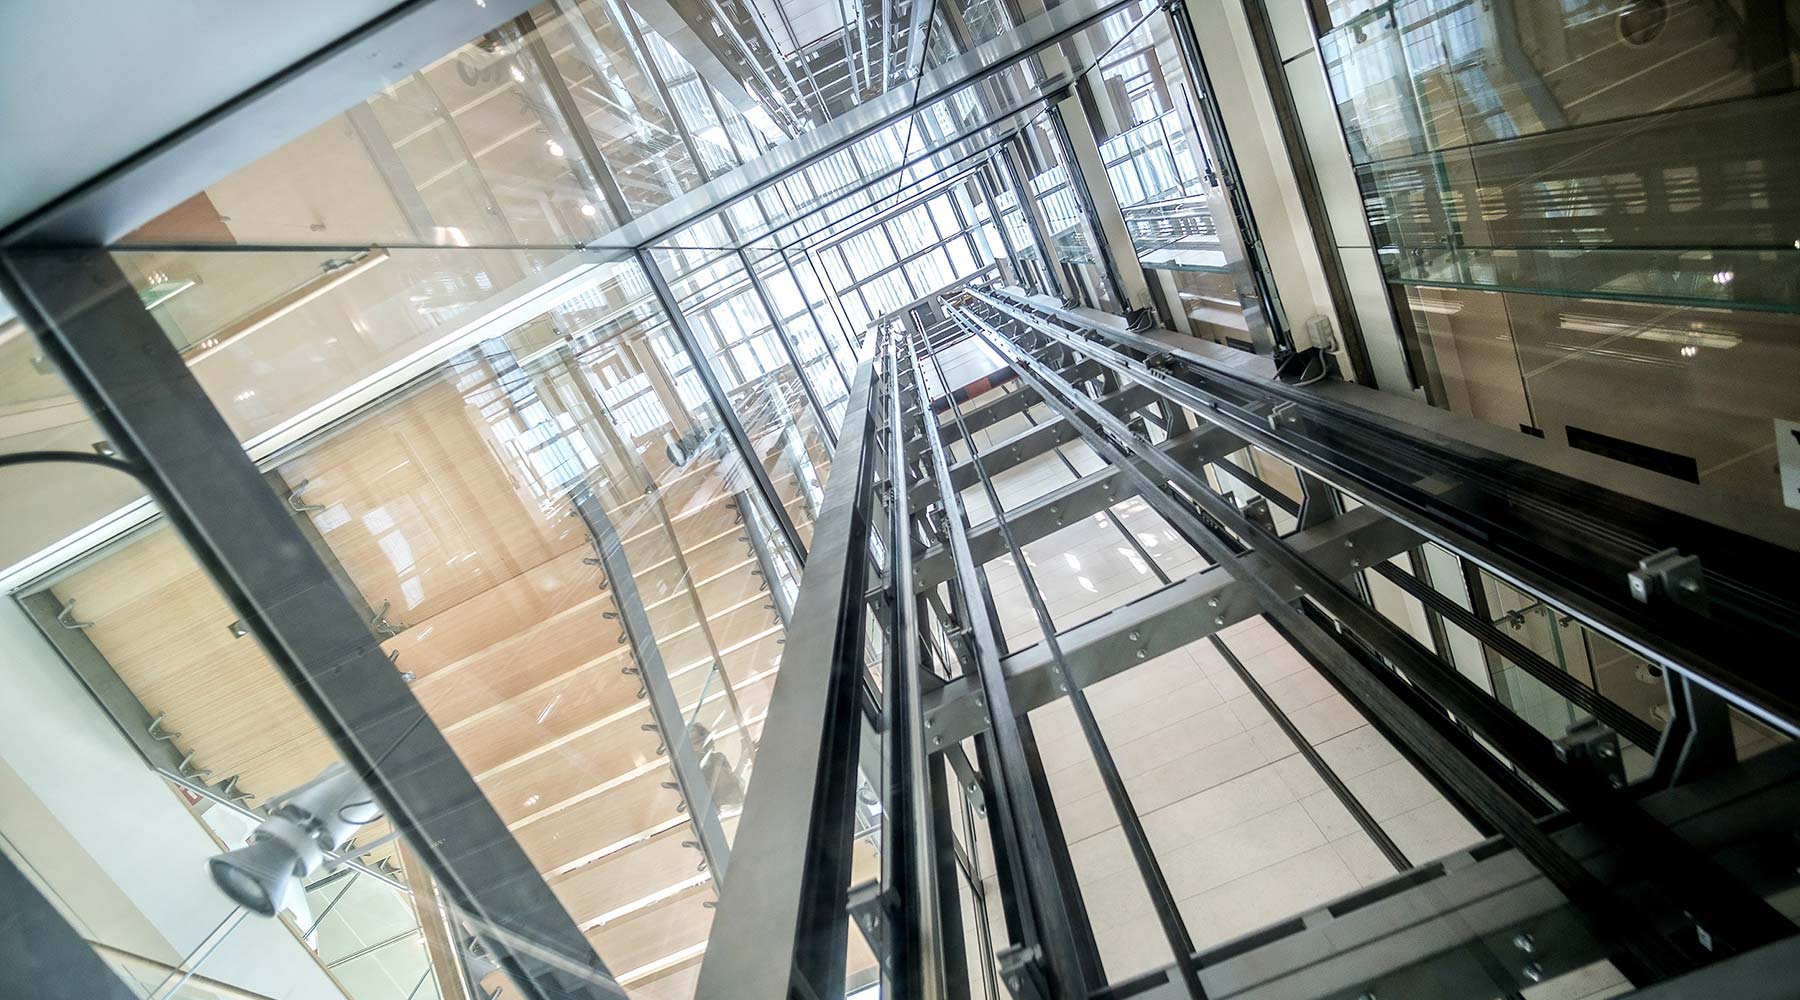 transparent lift modern elevator shaft glass building